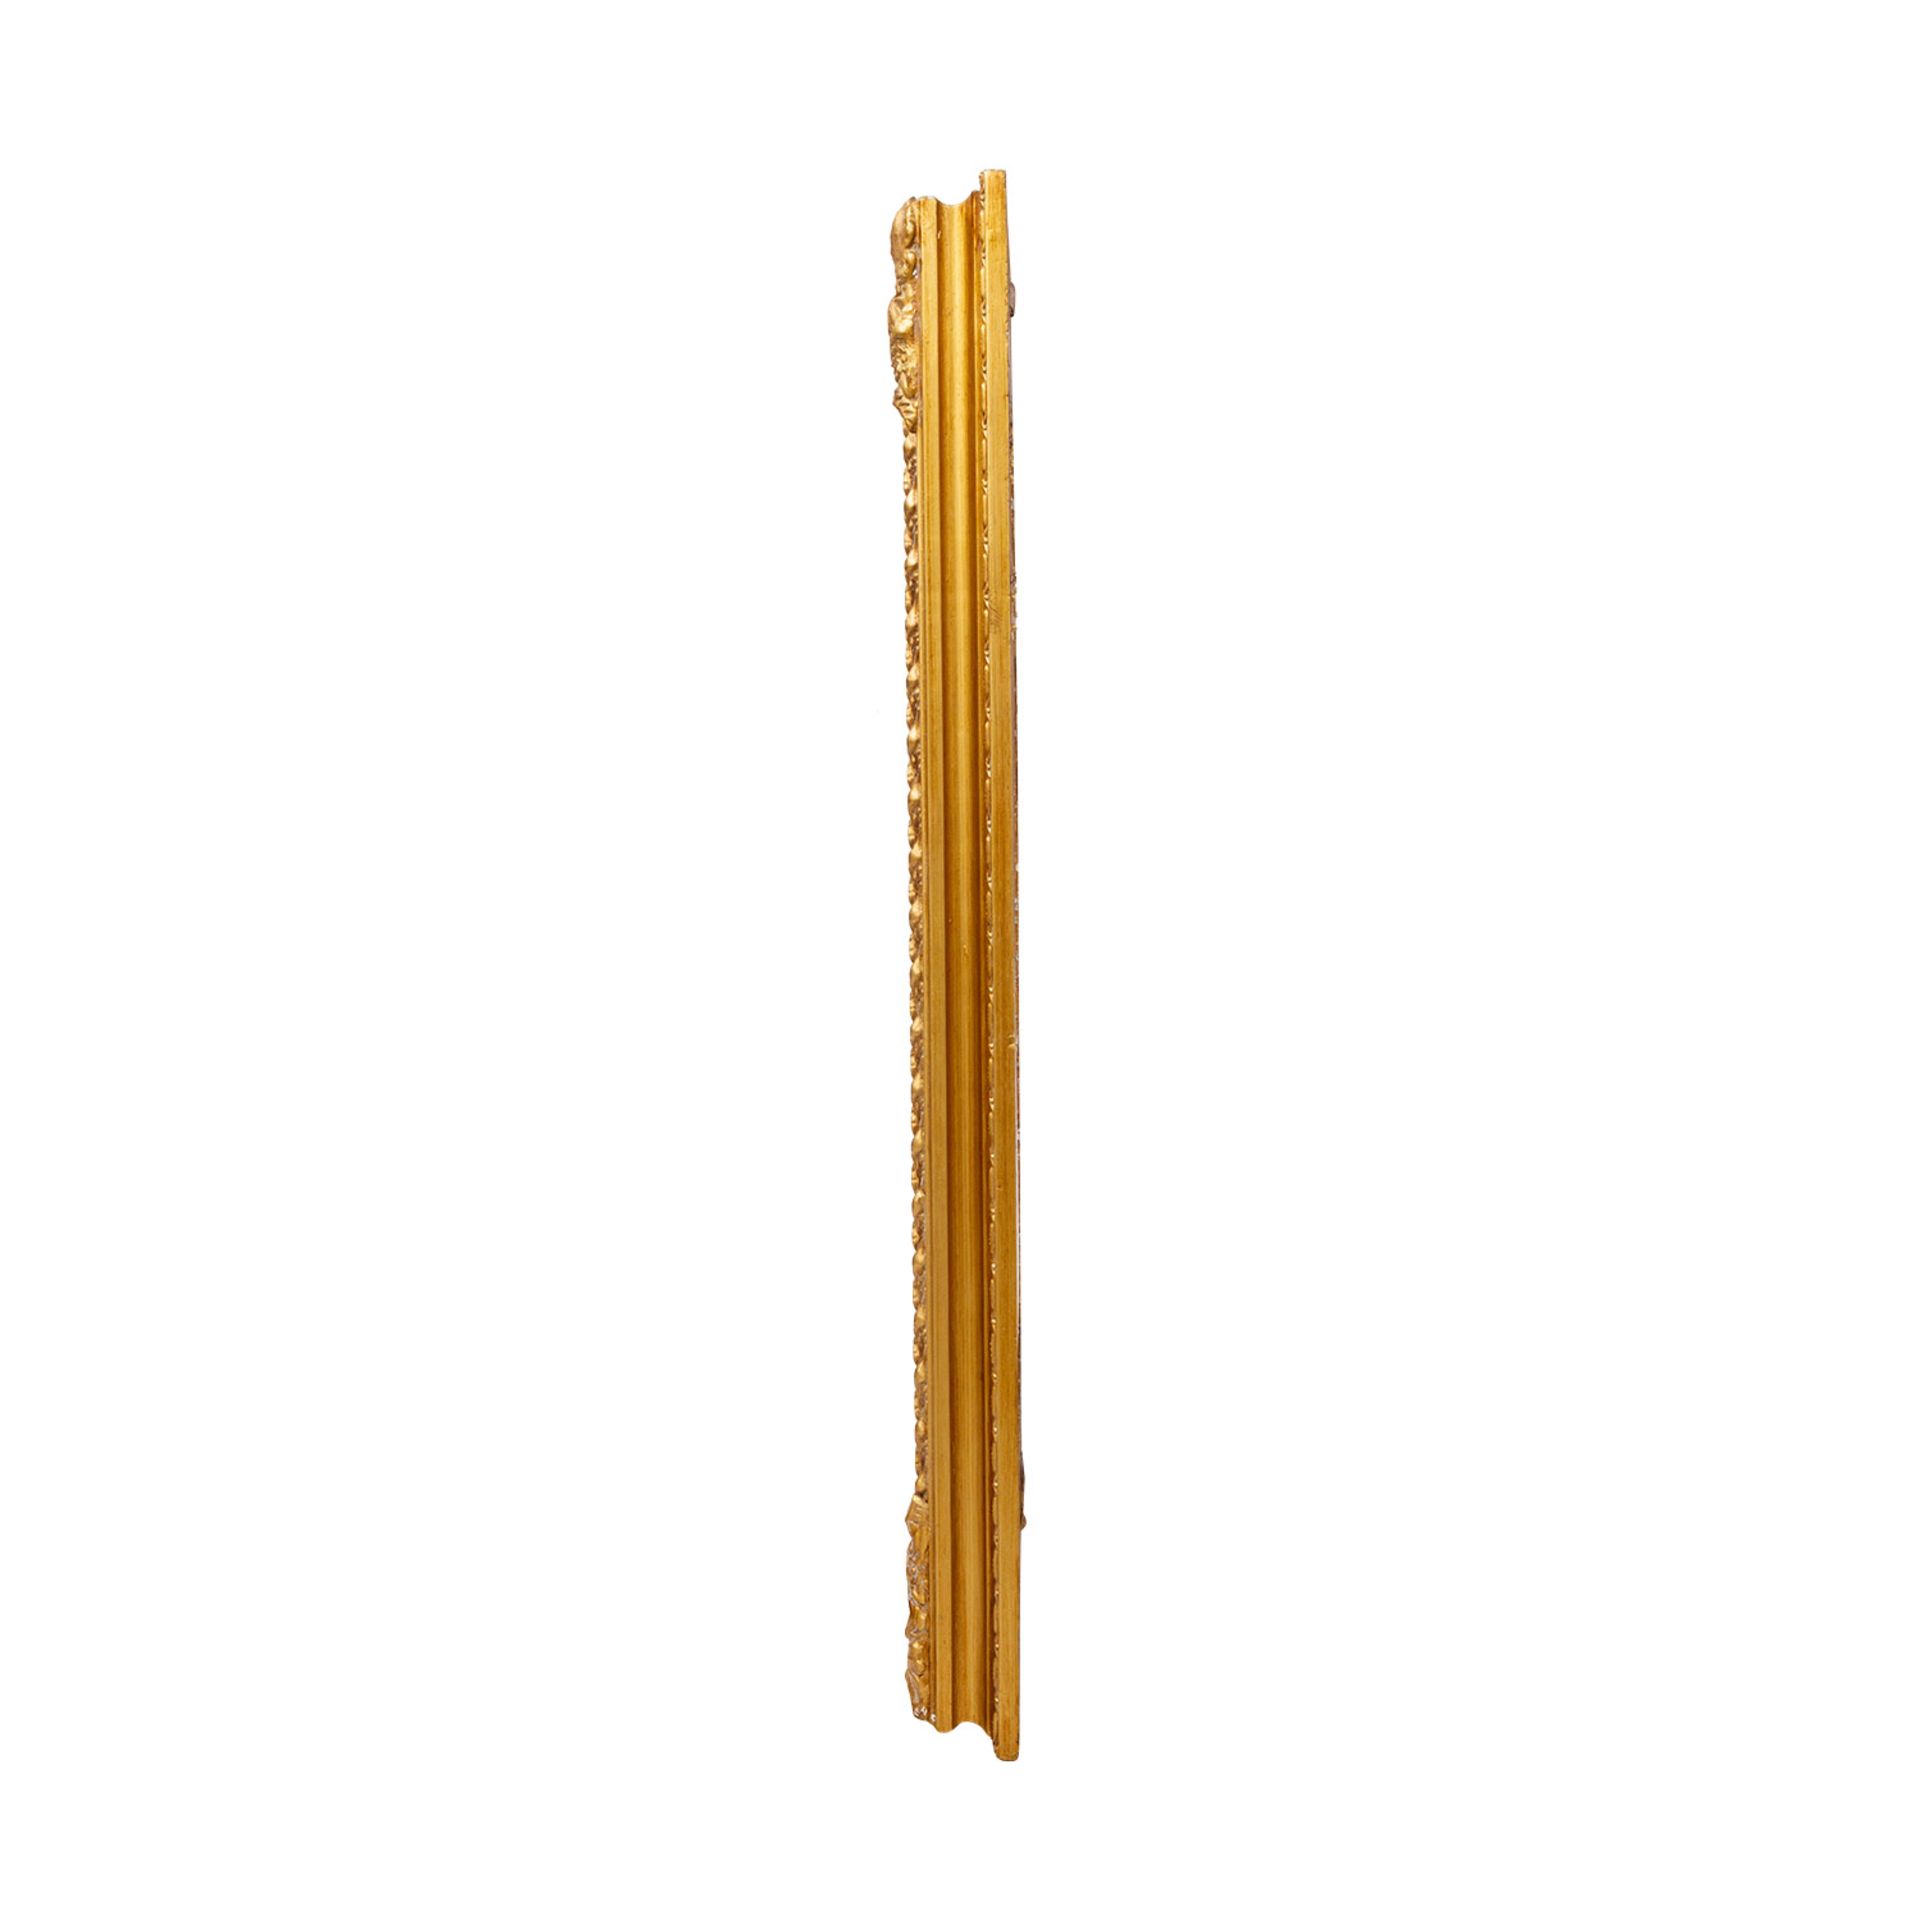 GROßER WANDSPIEGELNadelholz geschnitzt und stuckiert, goldfarben gefasster Spiegelrahmen, verziert - Image 2 of 3